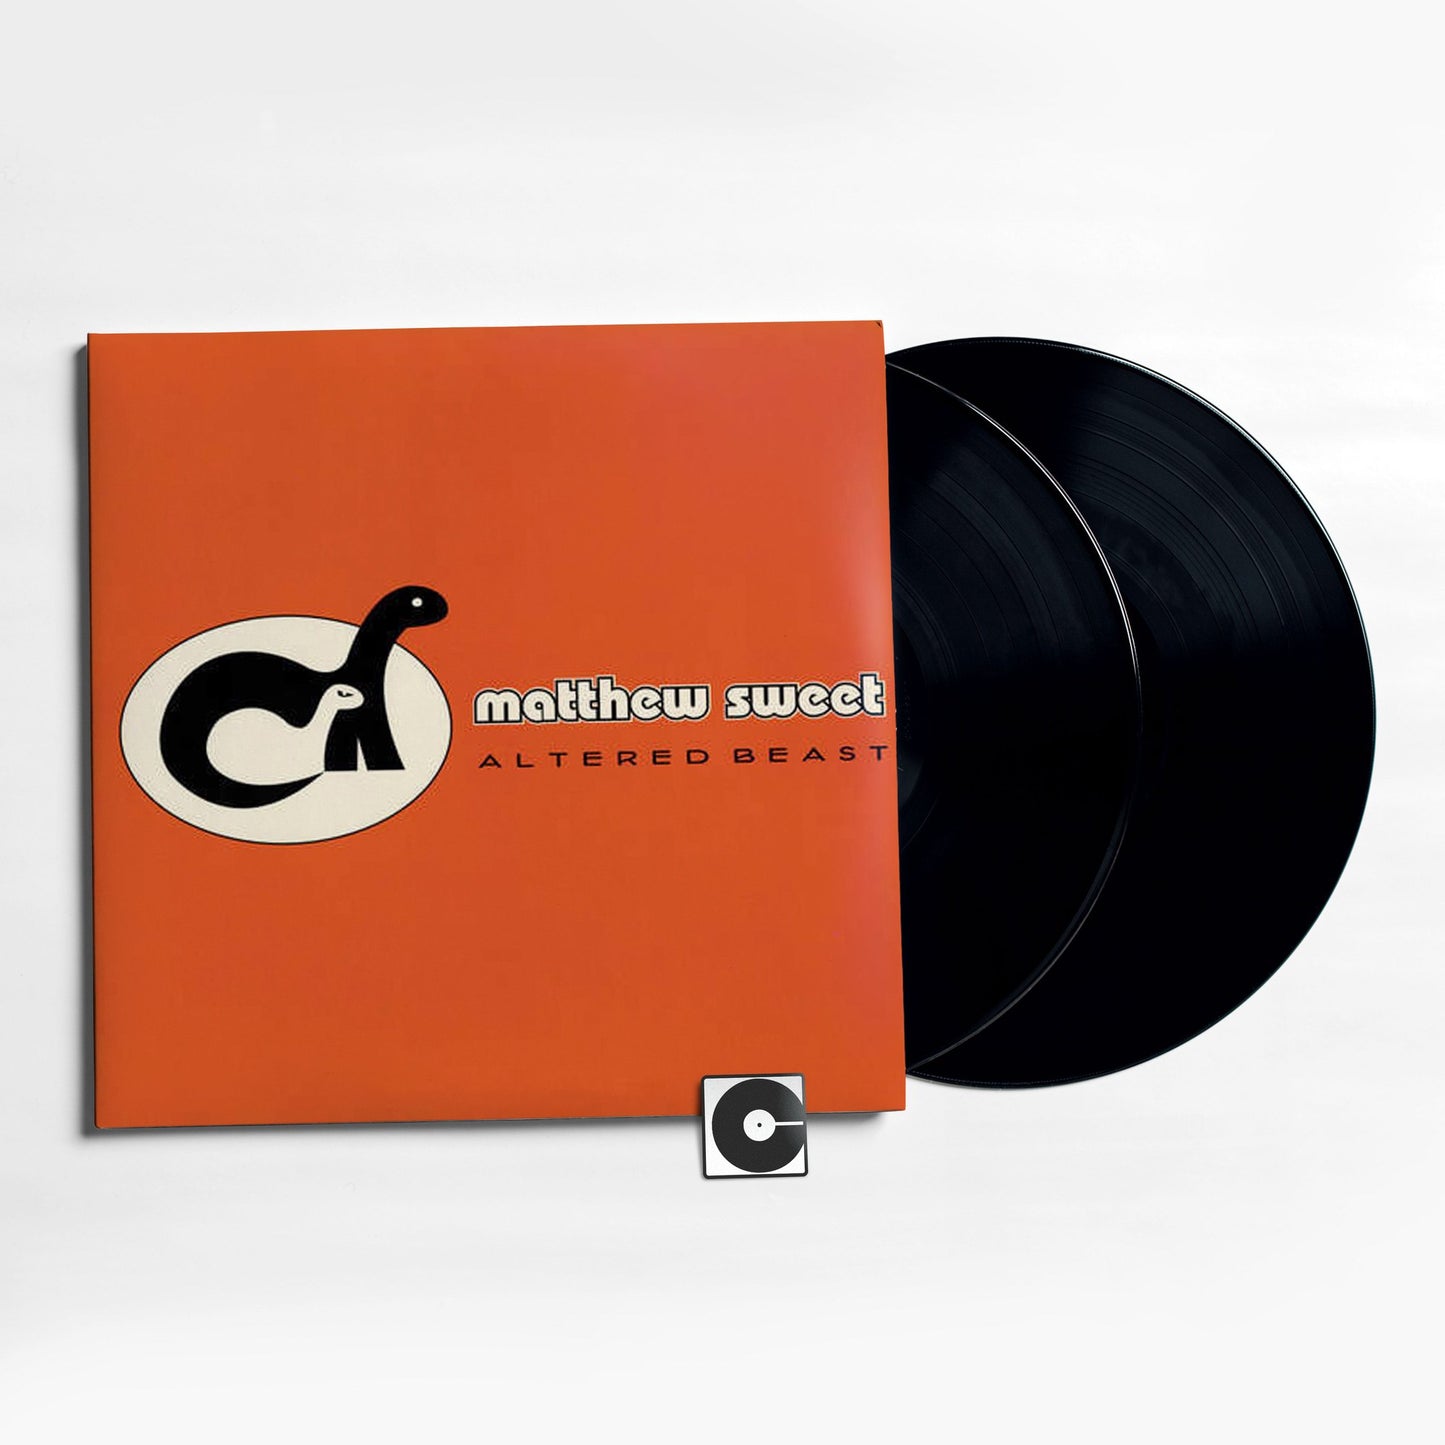 Matthew Sweet - "Altered Beast" Intervention Records